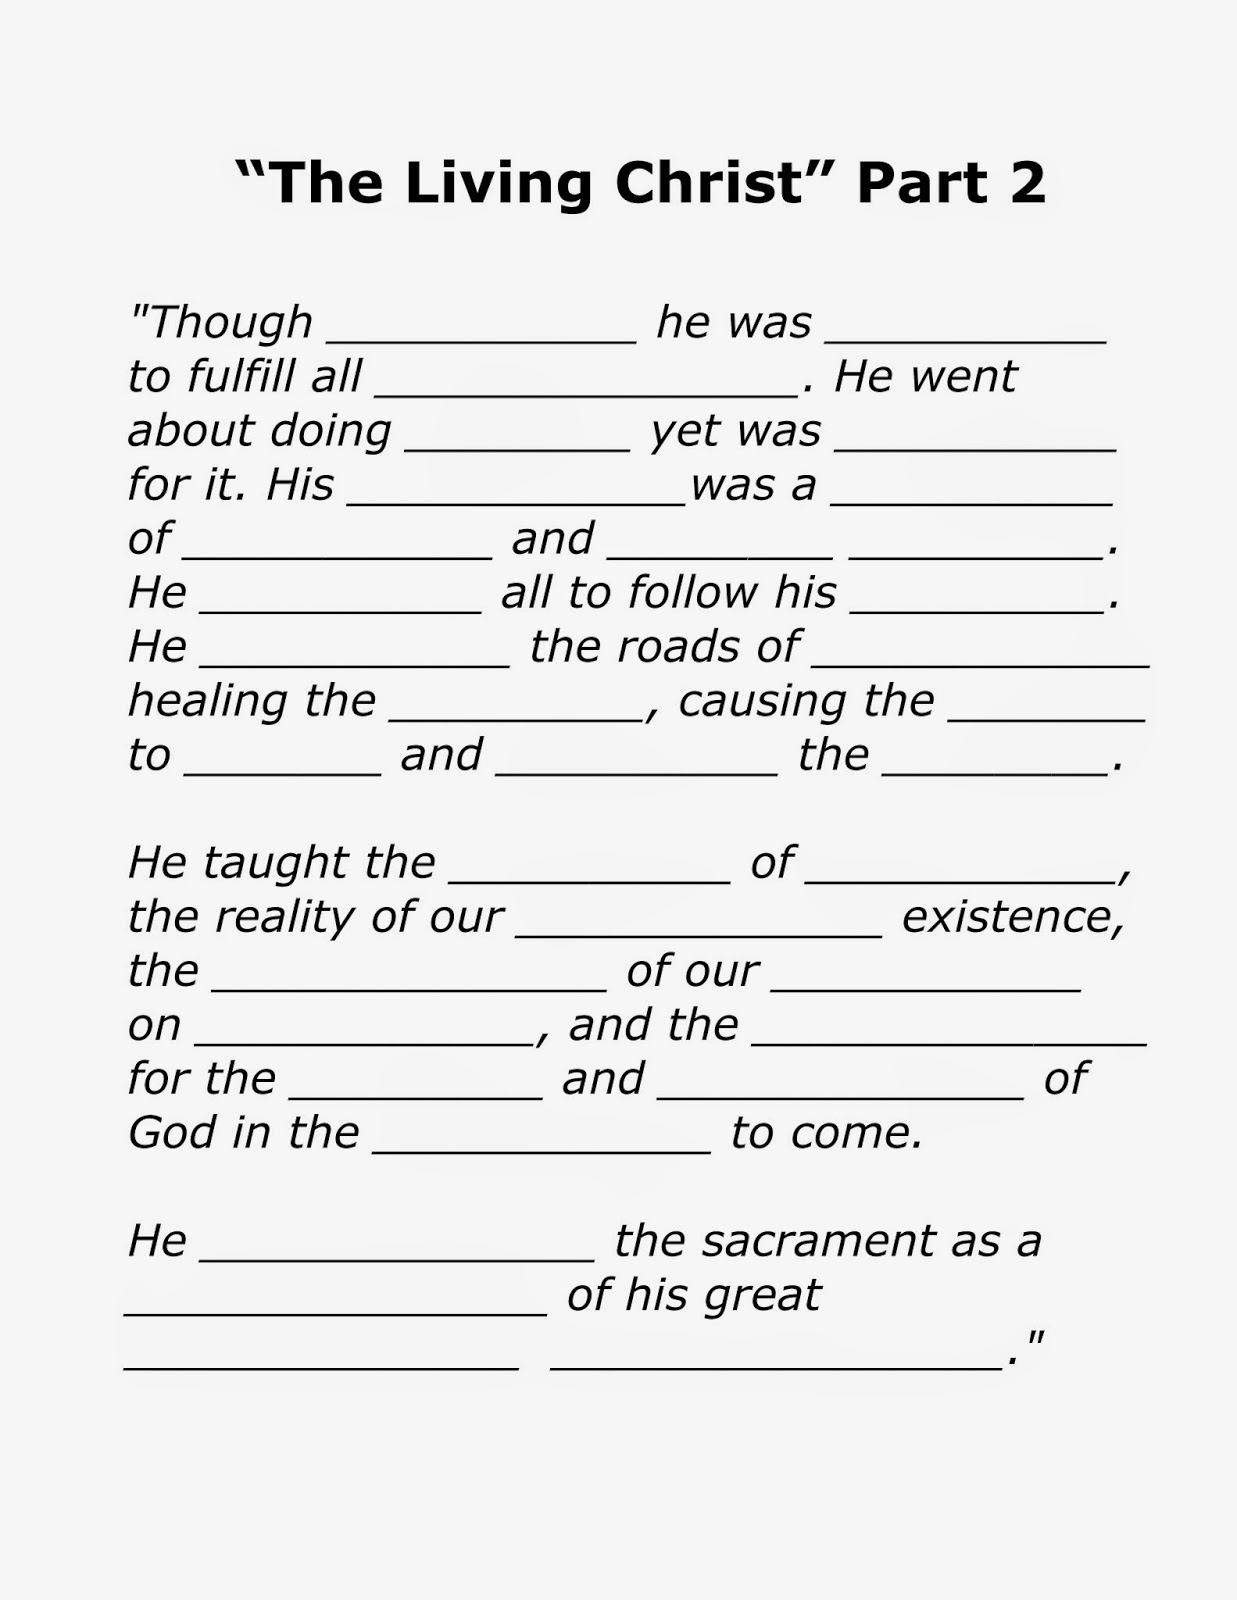 "The Living Christ" Songs